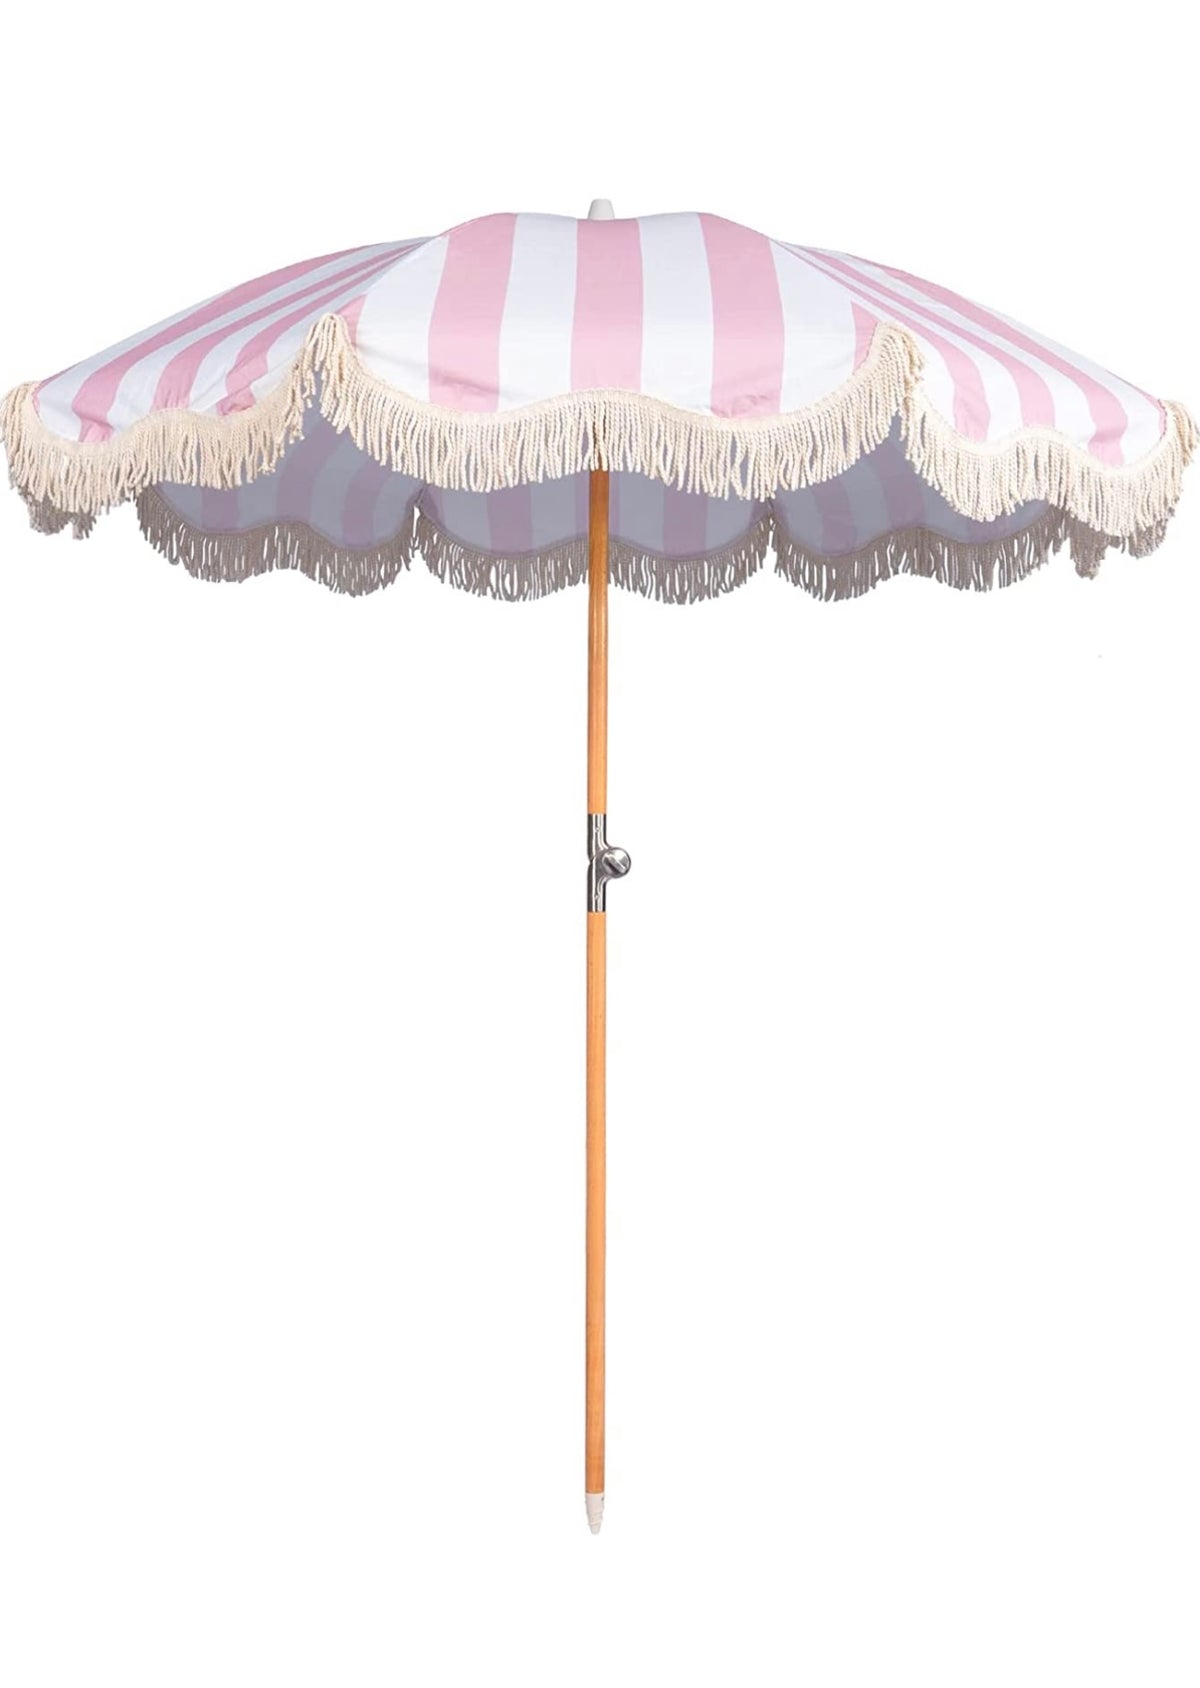 Light Pink & White Umbrella With White Base